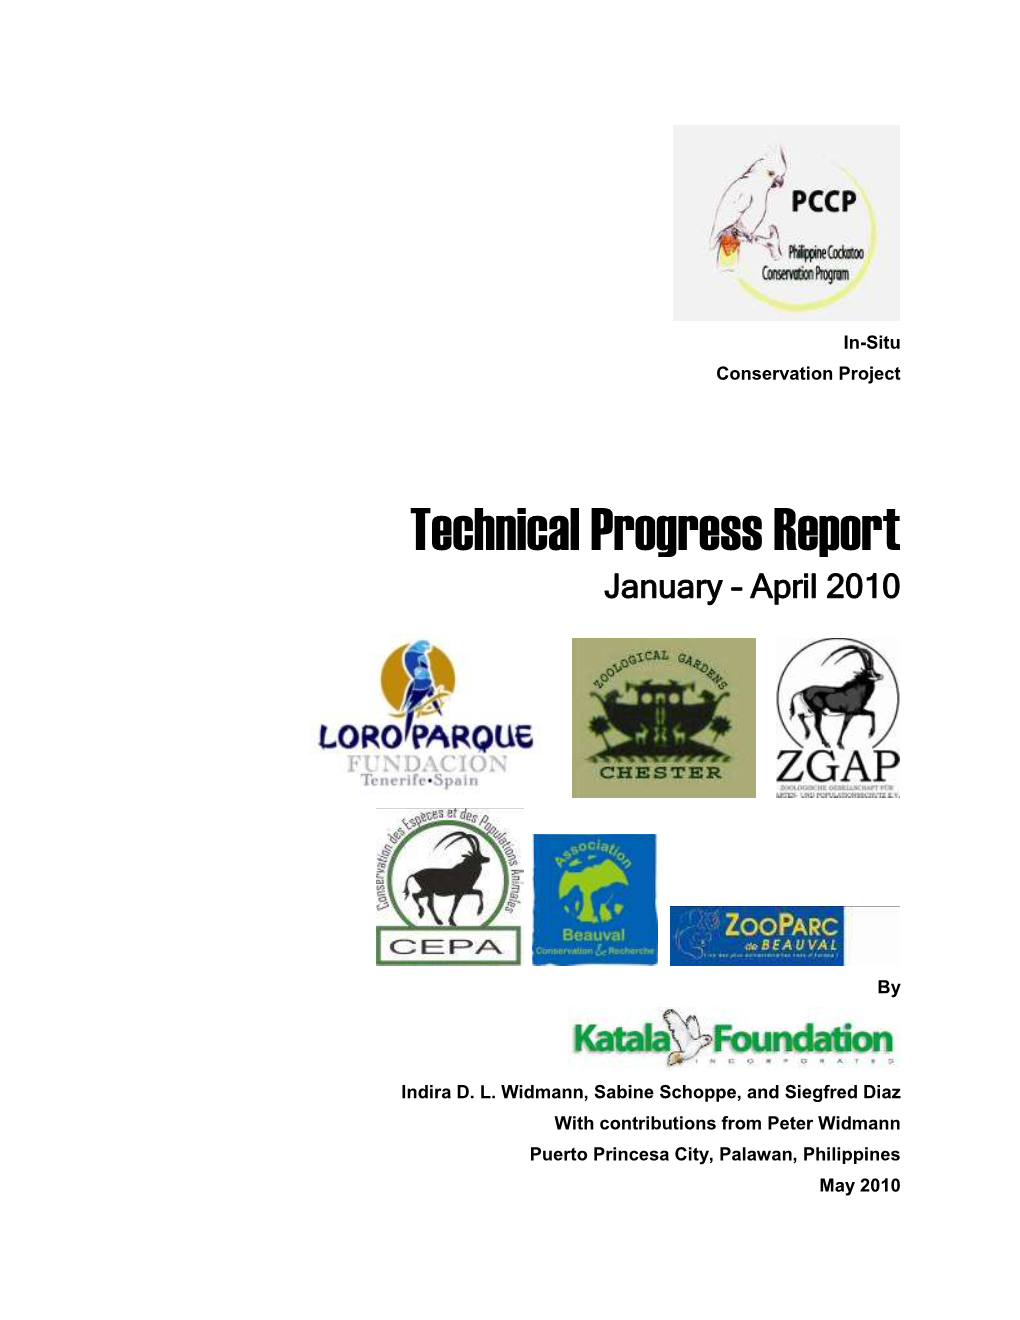 PCCP Technical Progress Report 2010